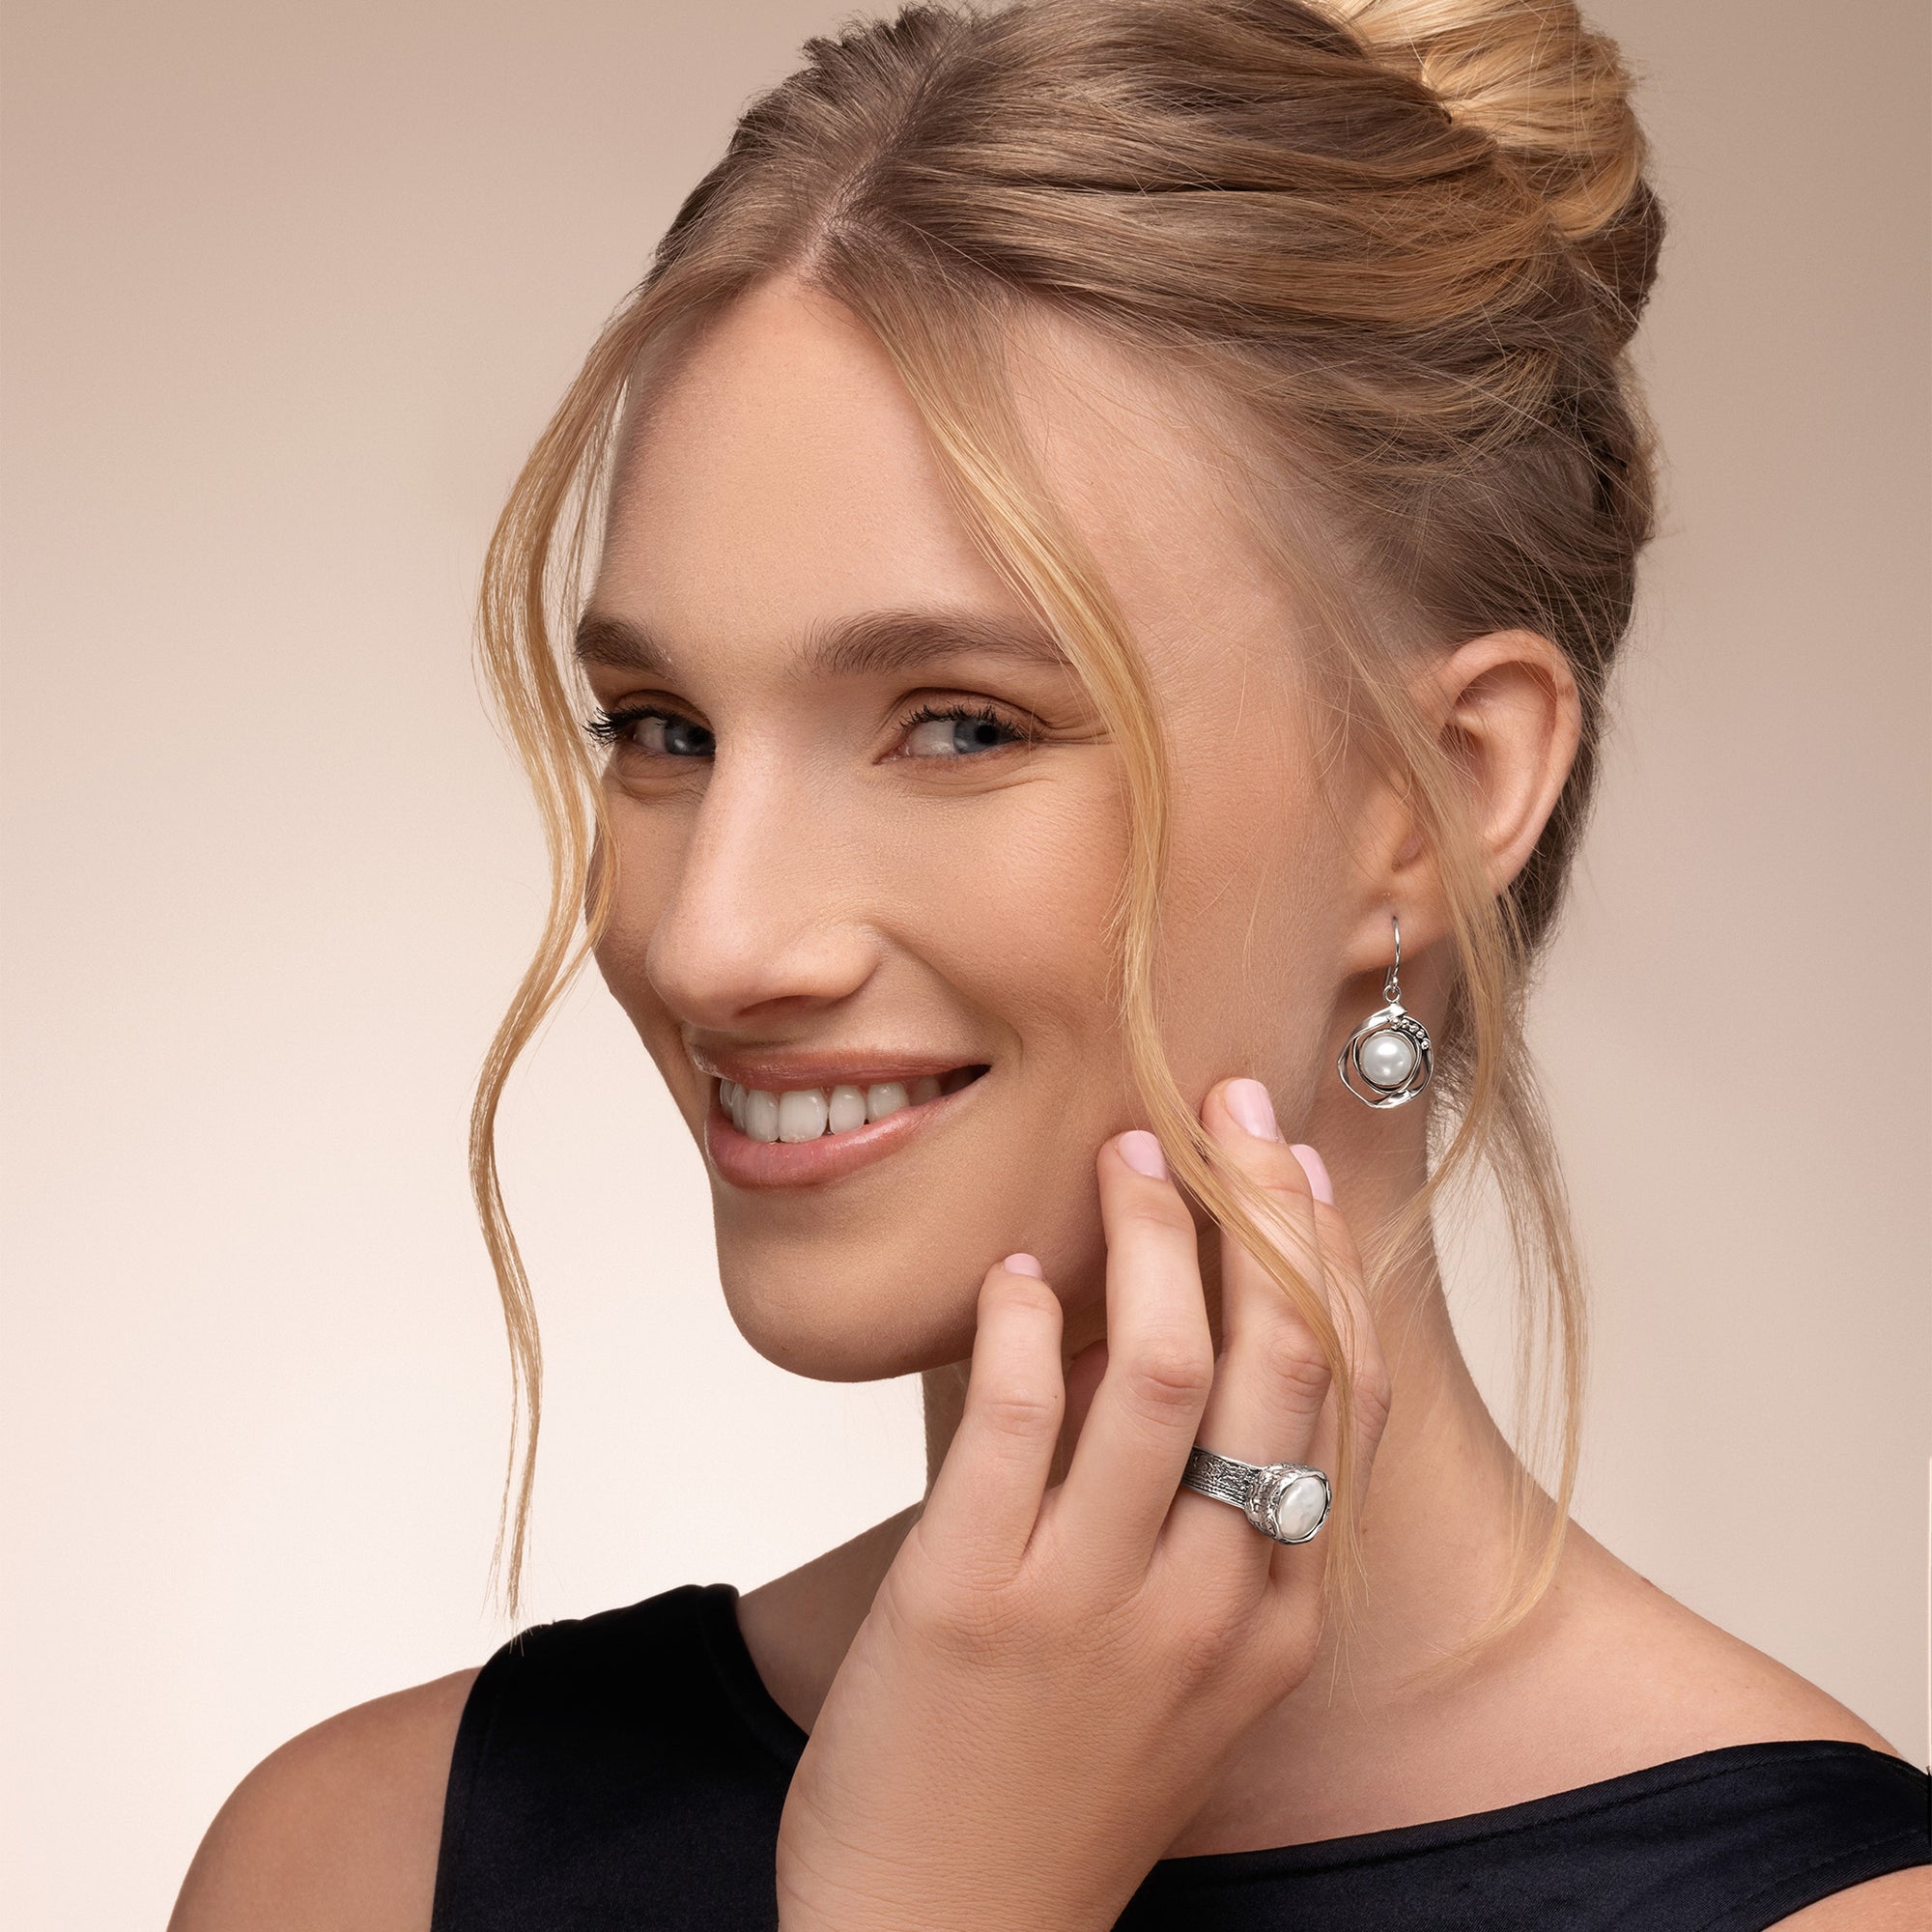 Elegant Sterling Silver Pearl Dangle Earrings